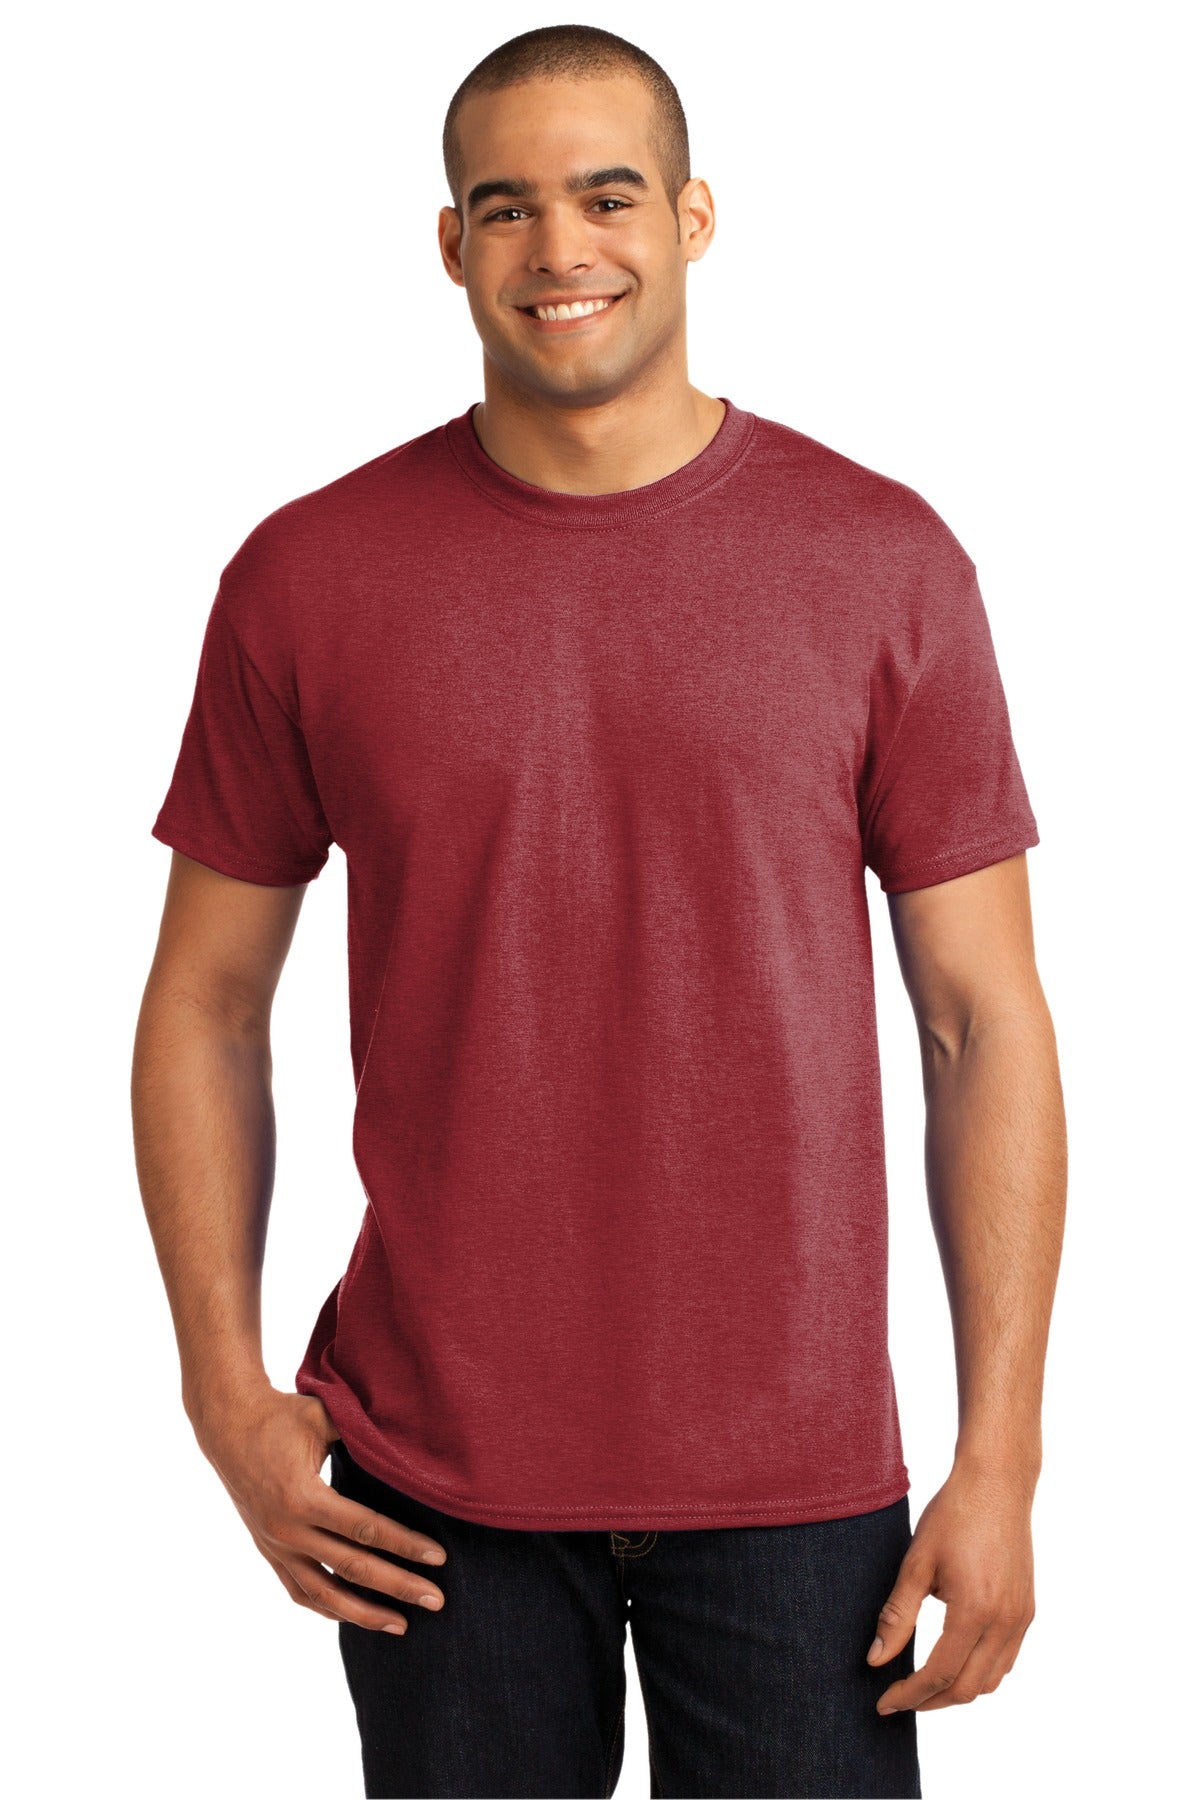 Hanes® - EcoSmart® 50/50 Cotton/Poly T-Shirt. 5170 [Heather Red] - DFW Impression